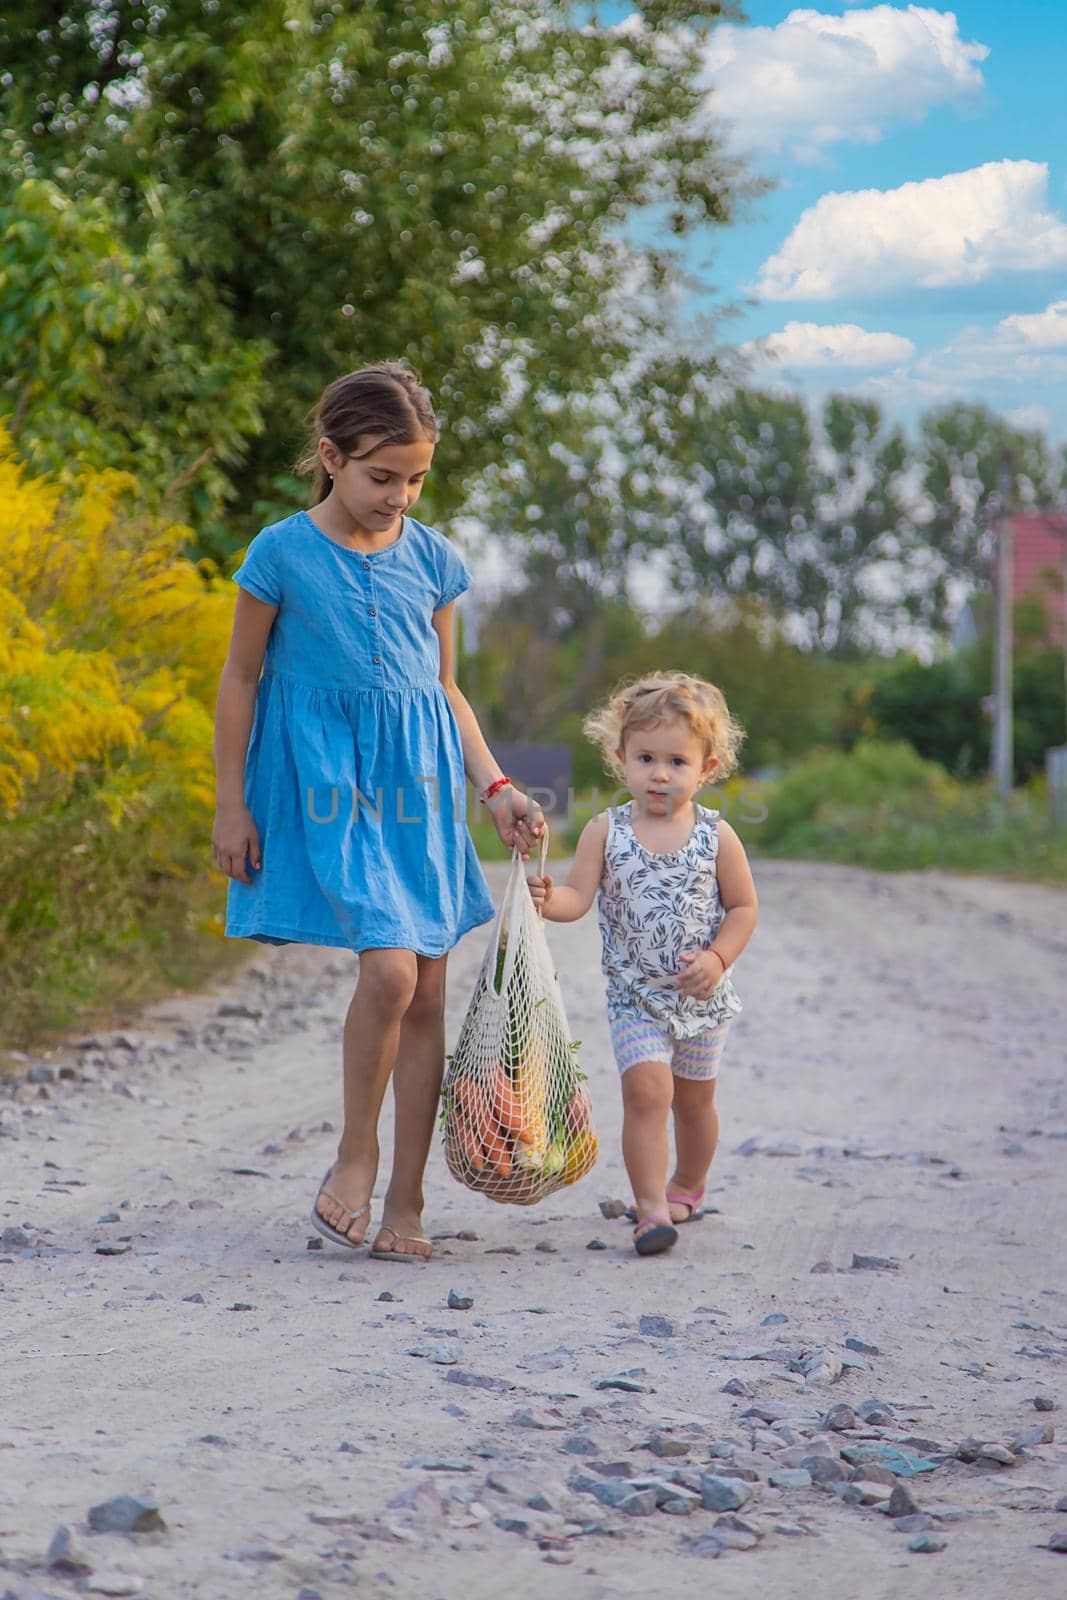 Children carry vegetables in a bag. Selective focus. by yanadjana